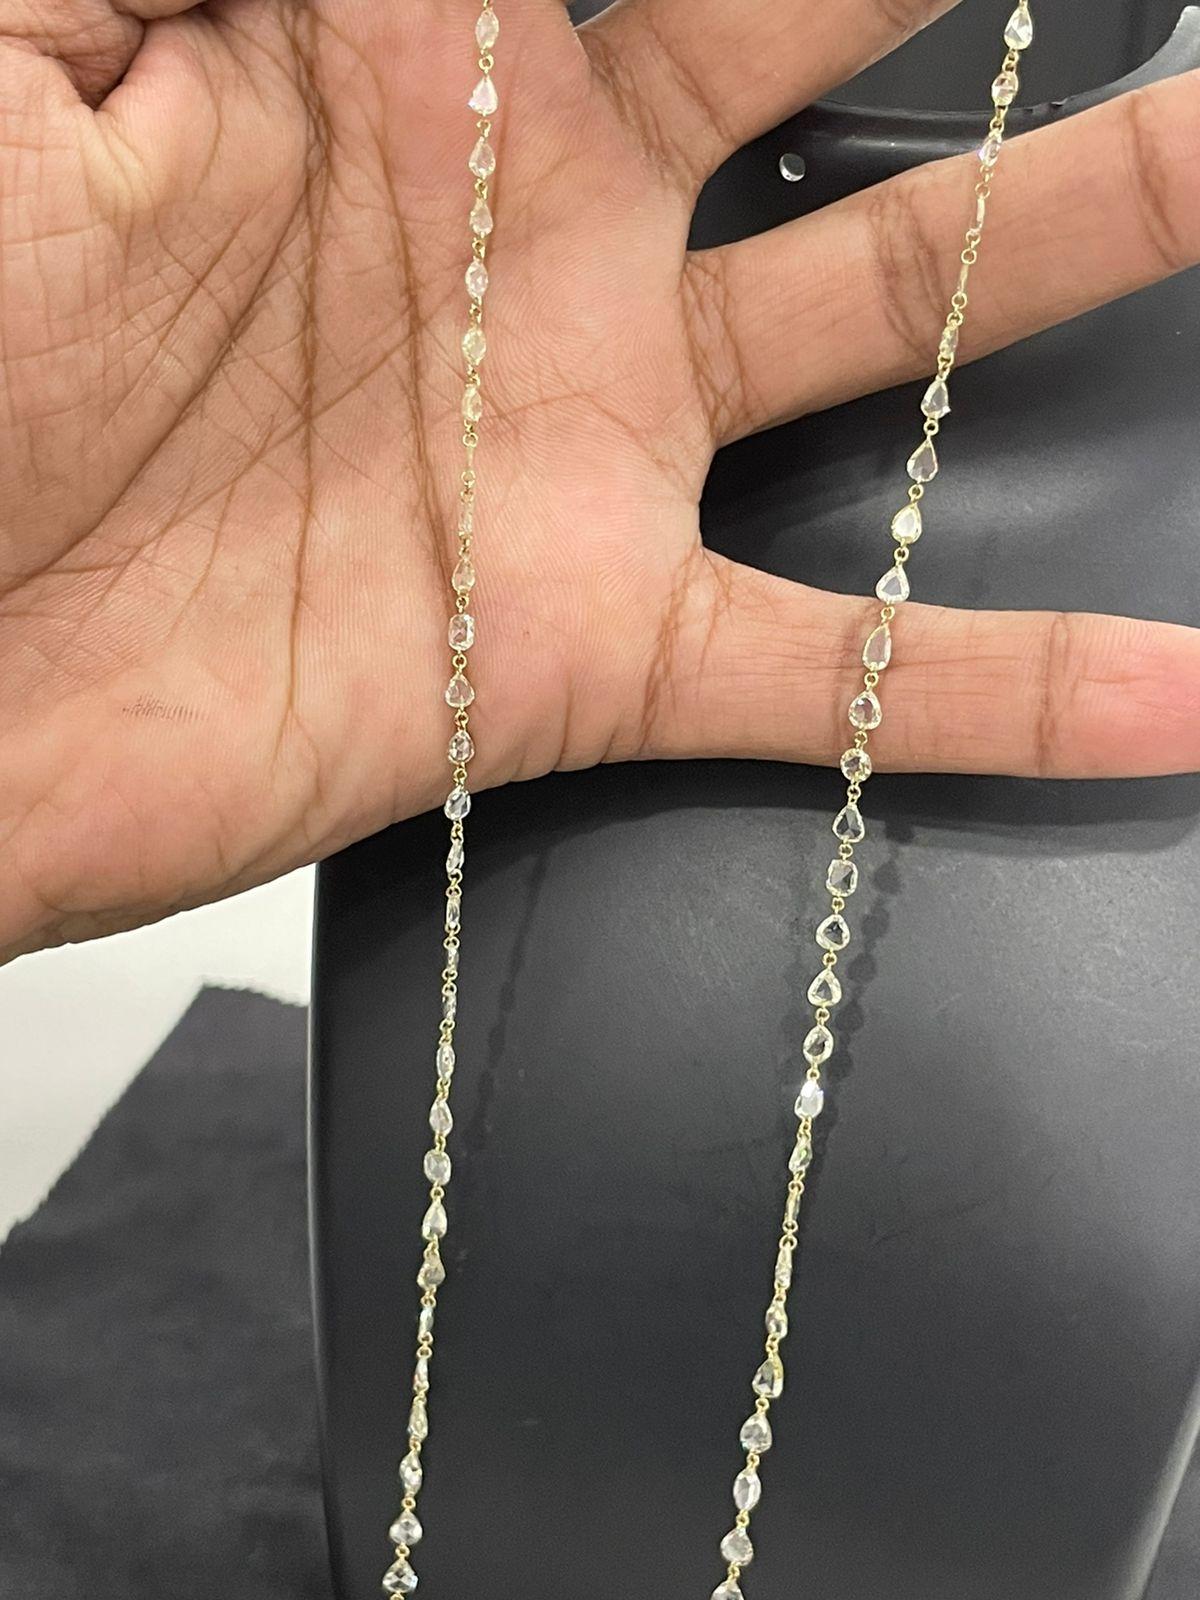 PANIM 11.43 Cts Fancy Rosecut Diamond Necklace in 18 Karat White Gold For Sale 4